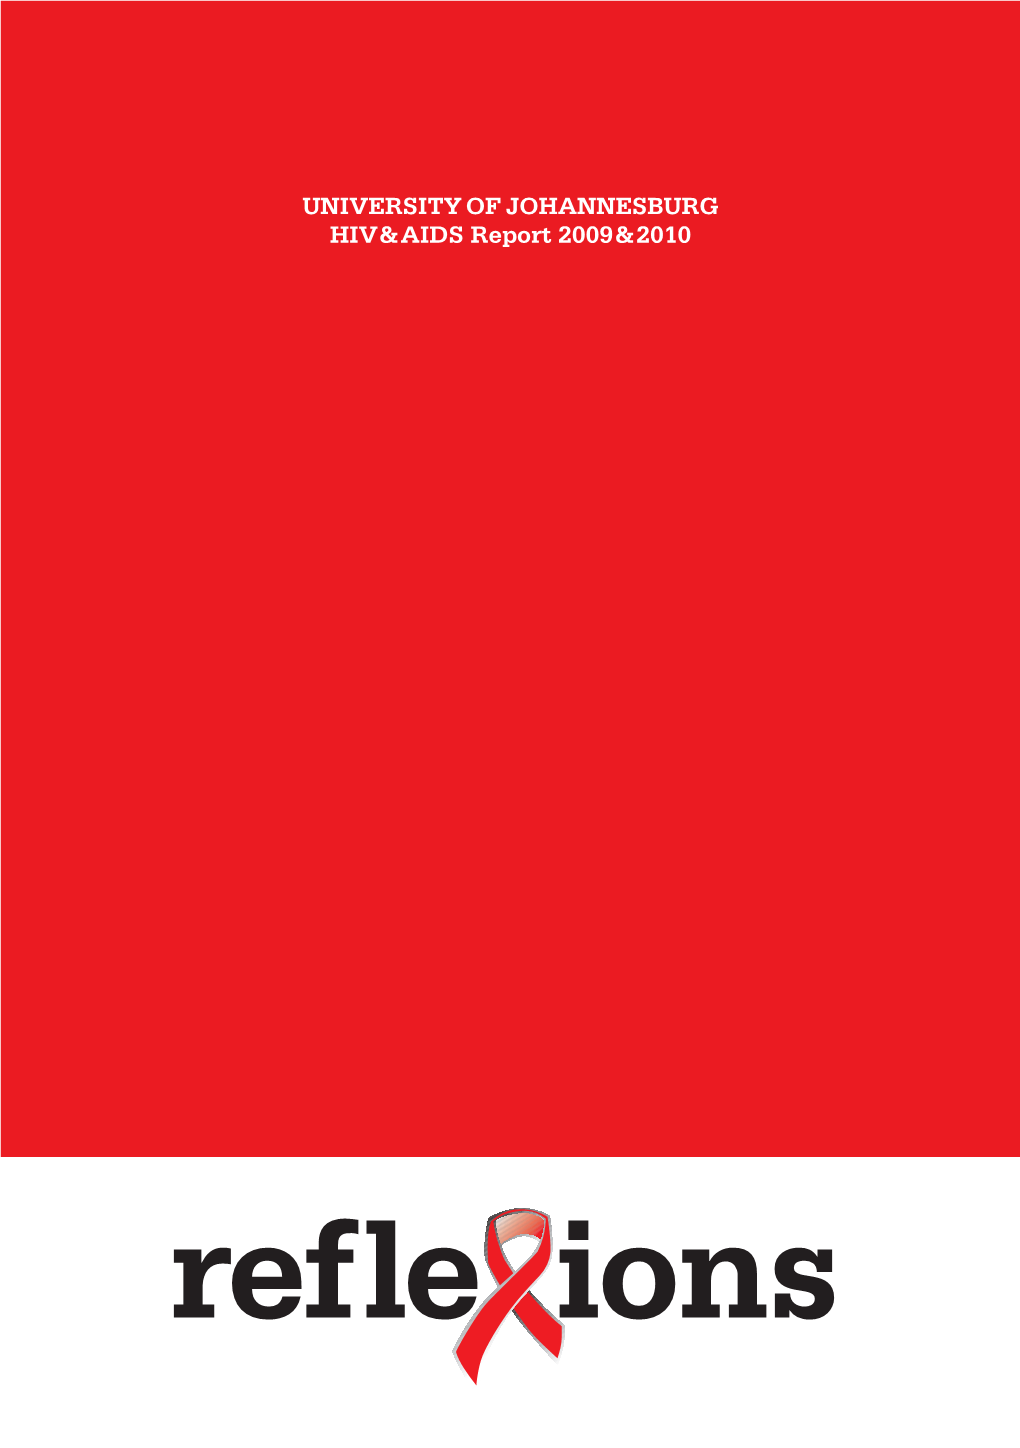 UNIVERSITYOFJOHANNESBURG HIV&AIDS Report 2009&2010